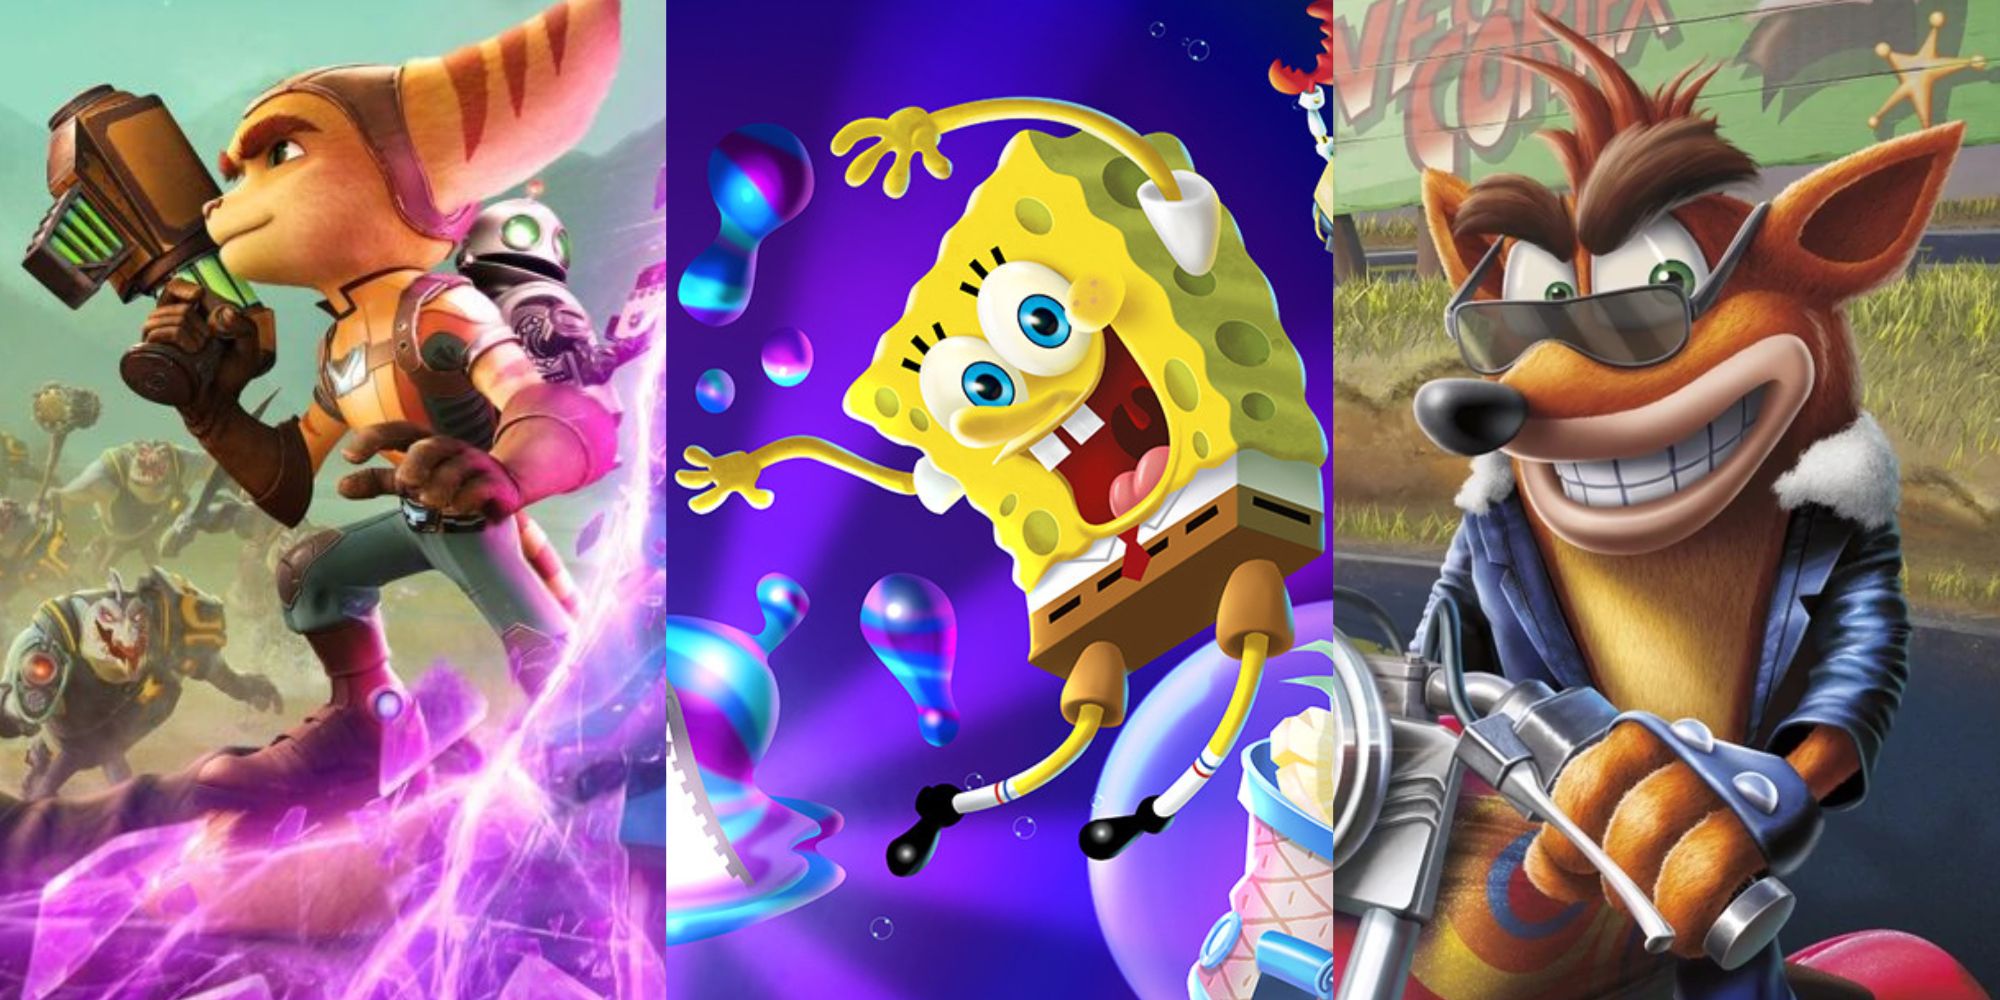 Split image featuring Ratchet, Spongebob, and Crash Bandicoot